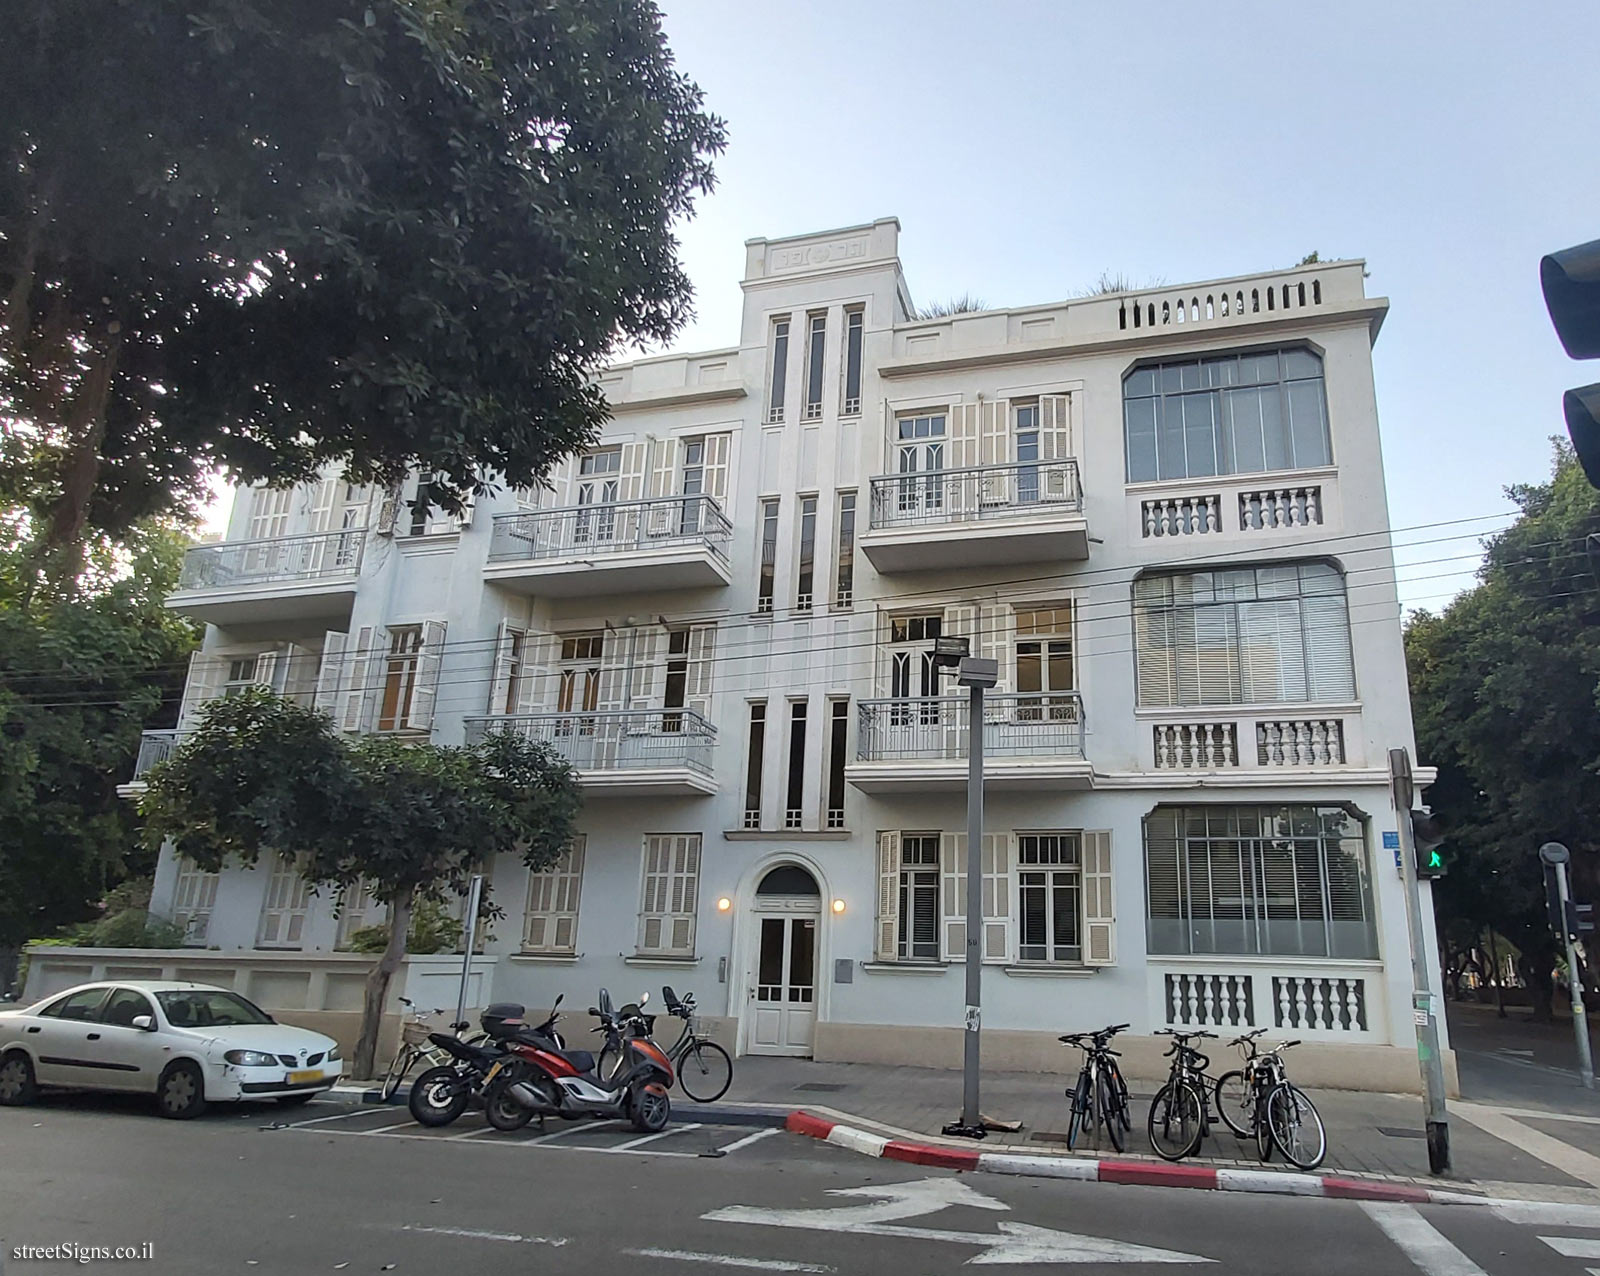 Tel Aviv - buildings for conservation - 44 Balfour